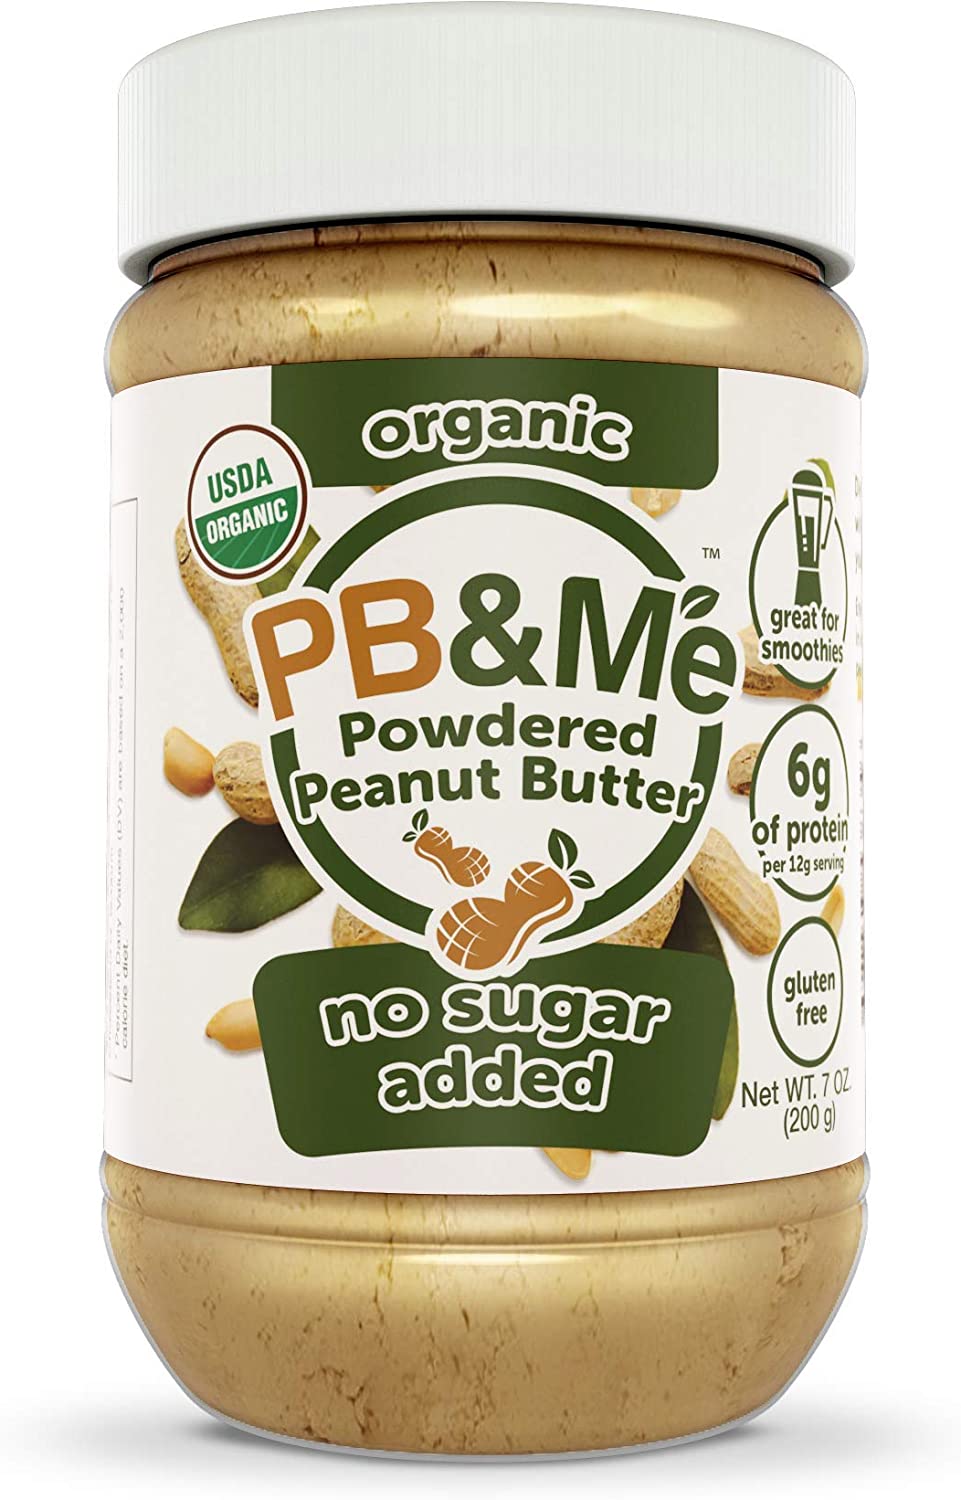 PB&Me: Powdered Peanut Butter (No Sugar Added)